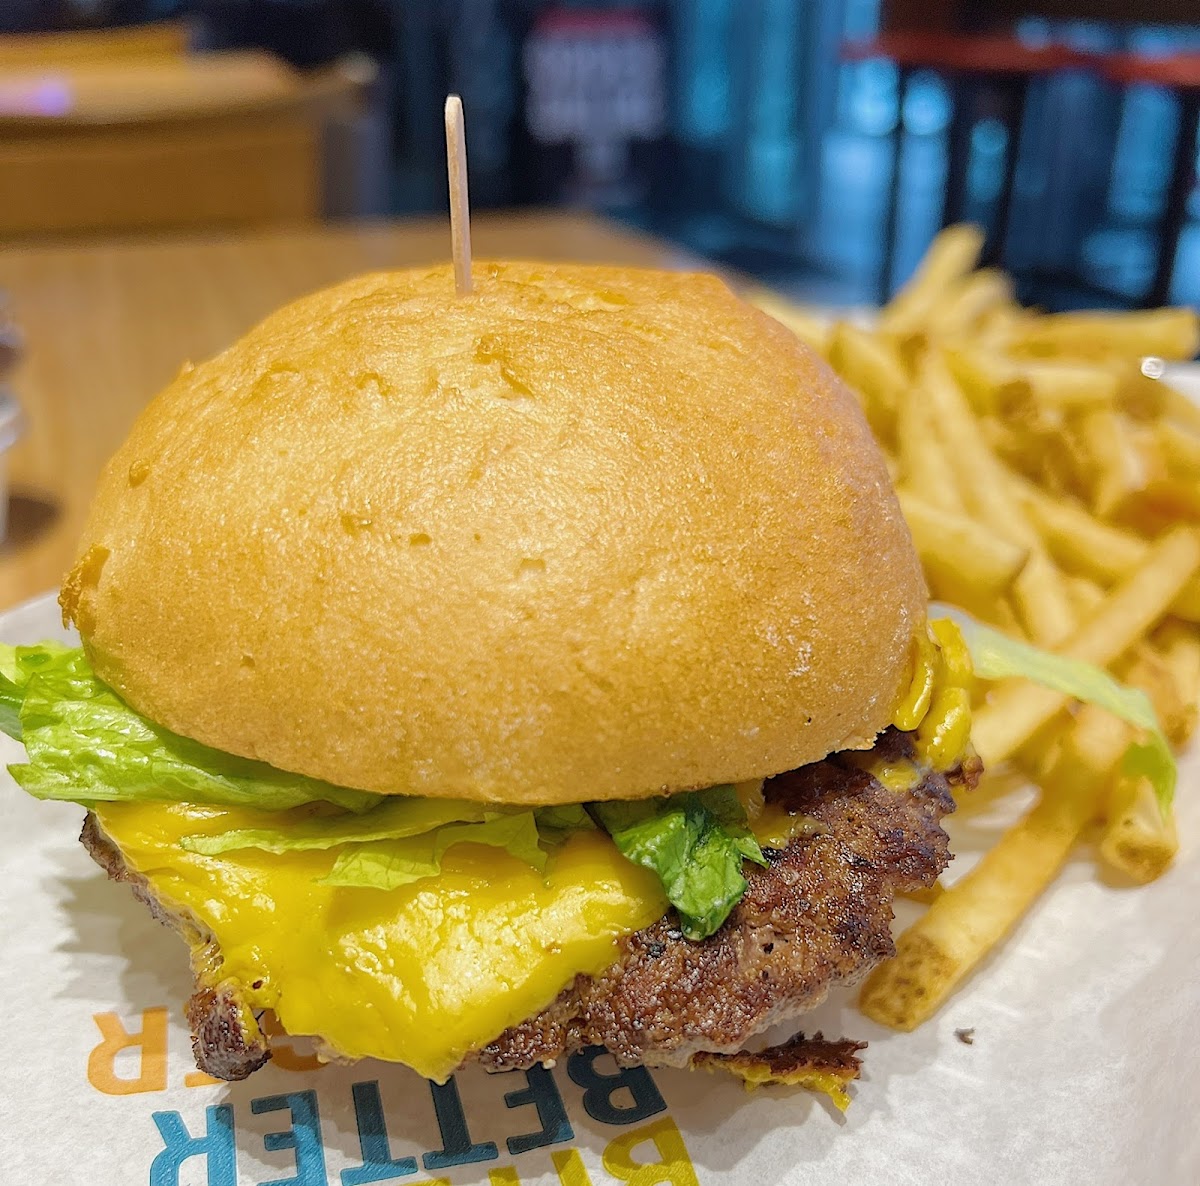 Classic Smashburger & fries